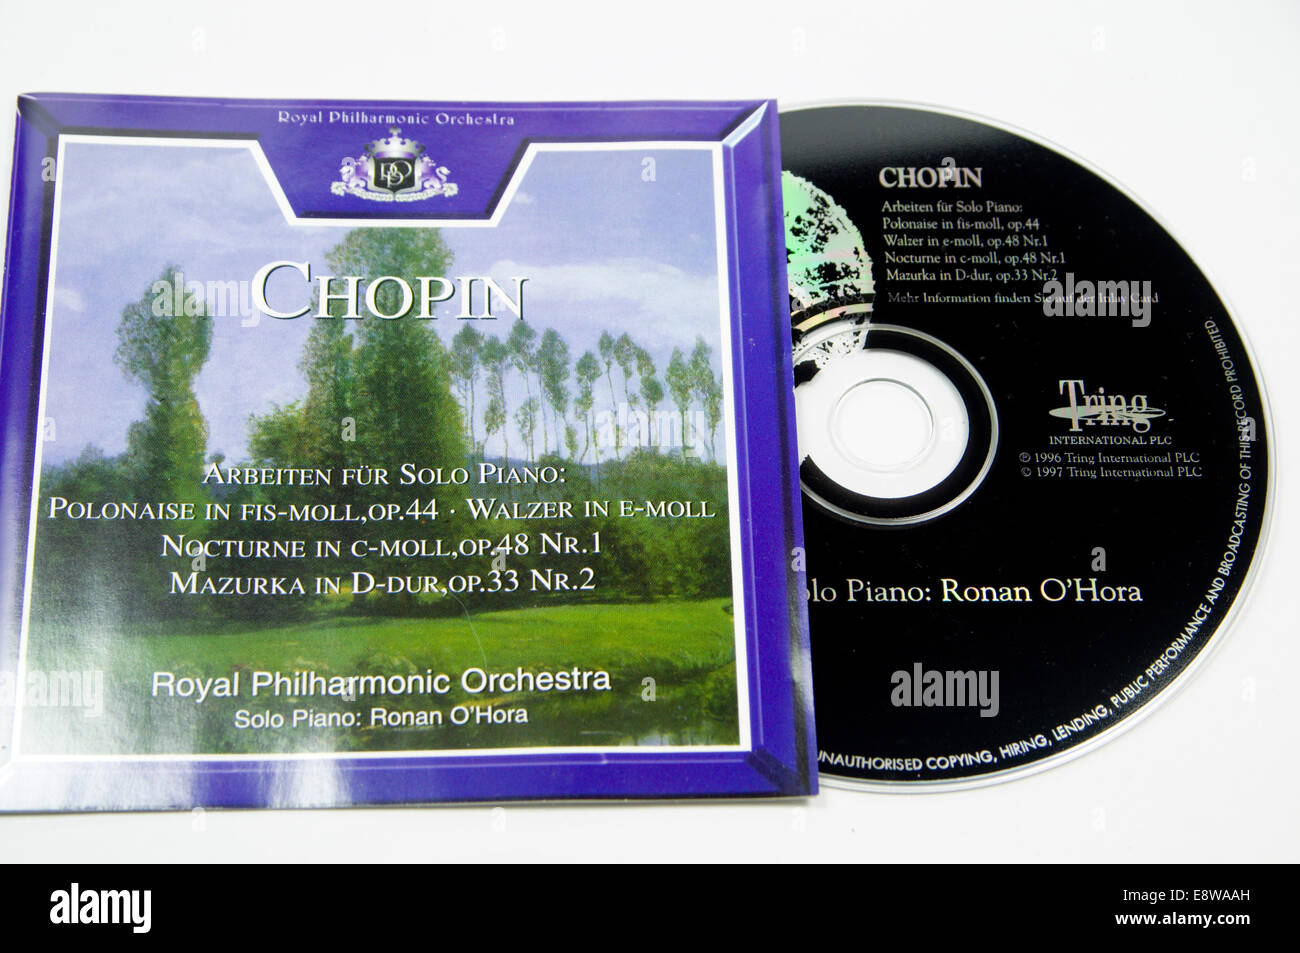 Chopin-CD. Stockfoto